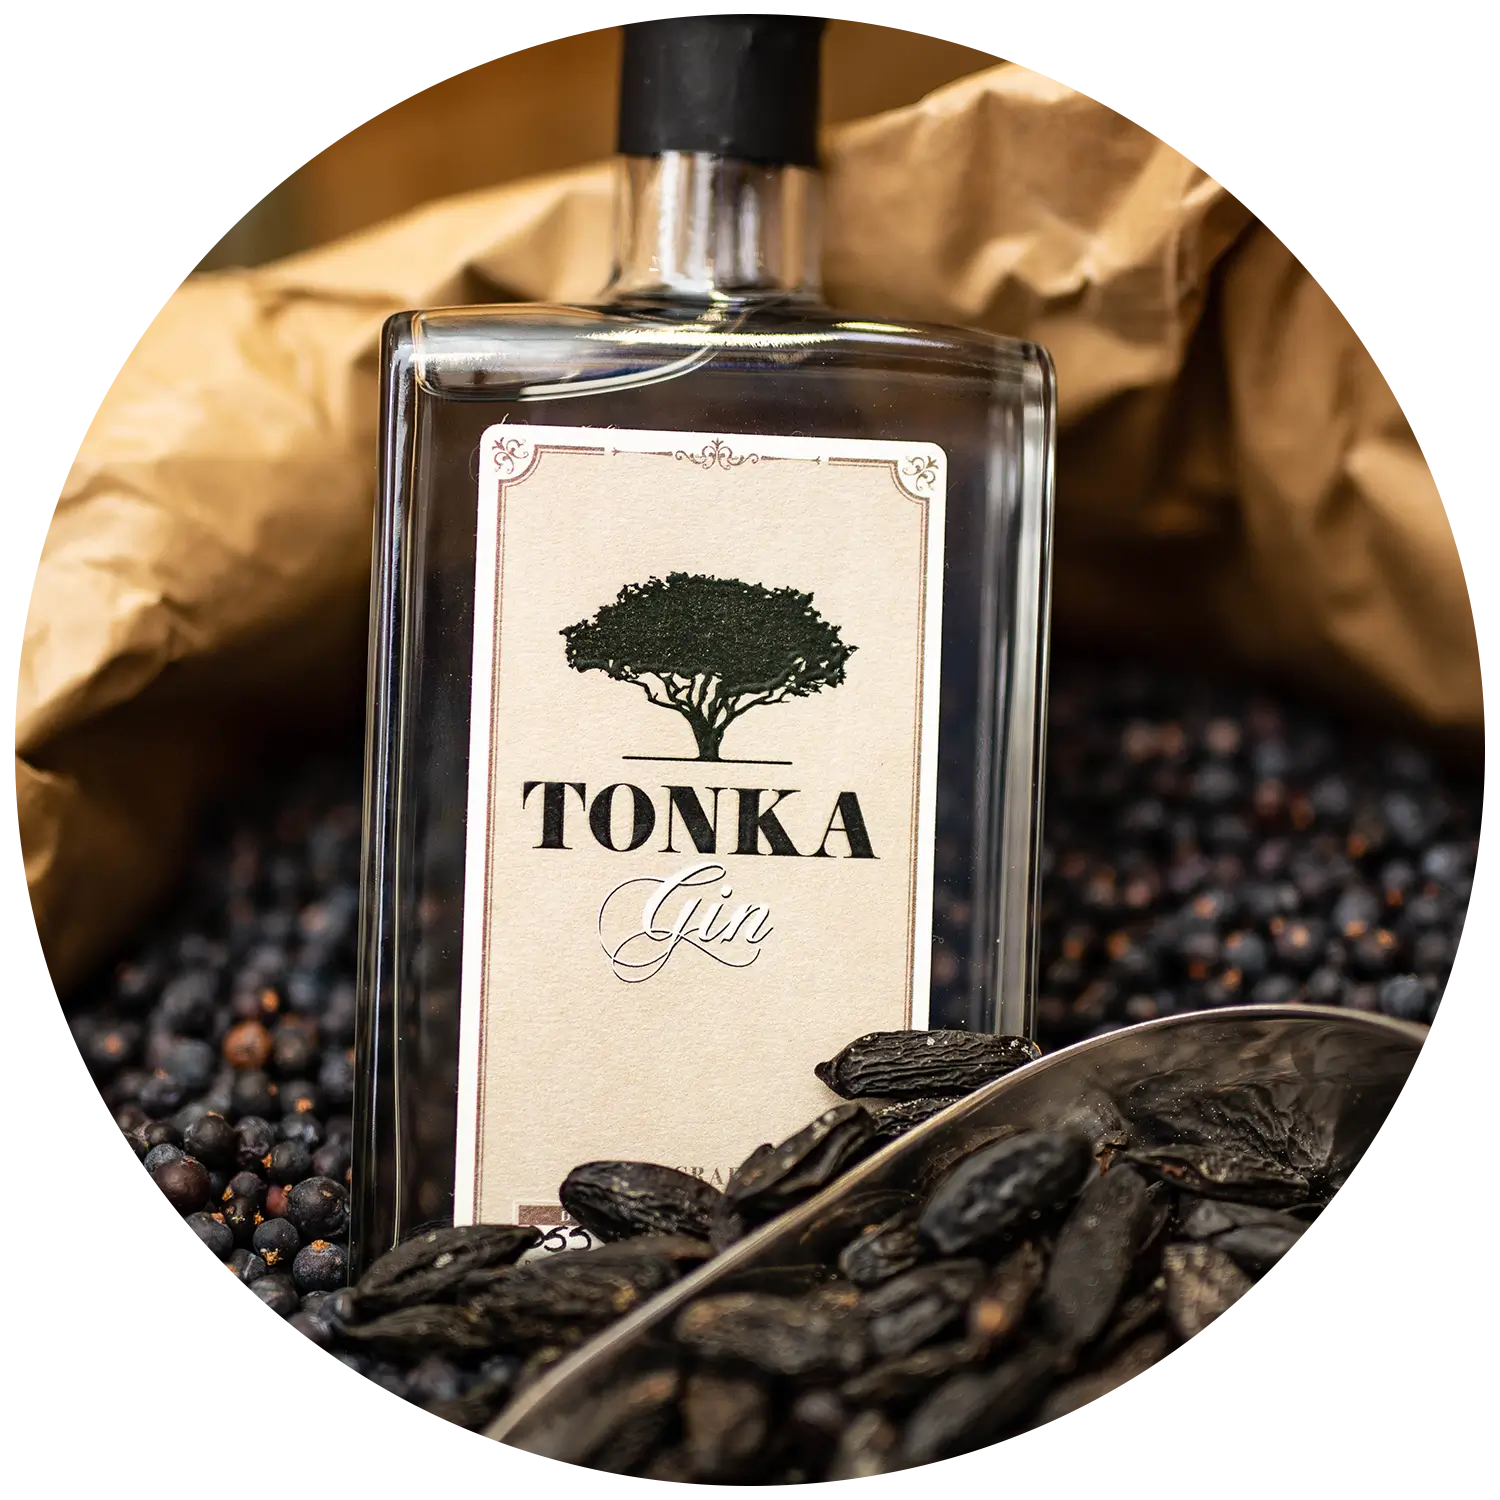 Tonka Gin Classic Spirituosenliebhaber - meets bitter – Vanilla almond